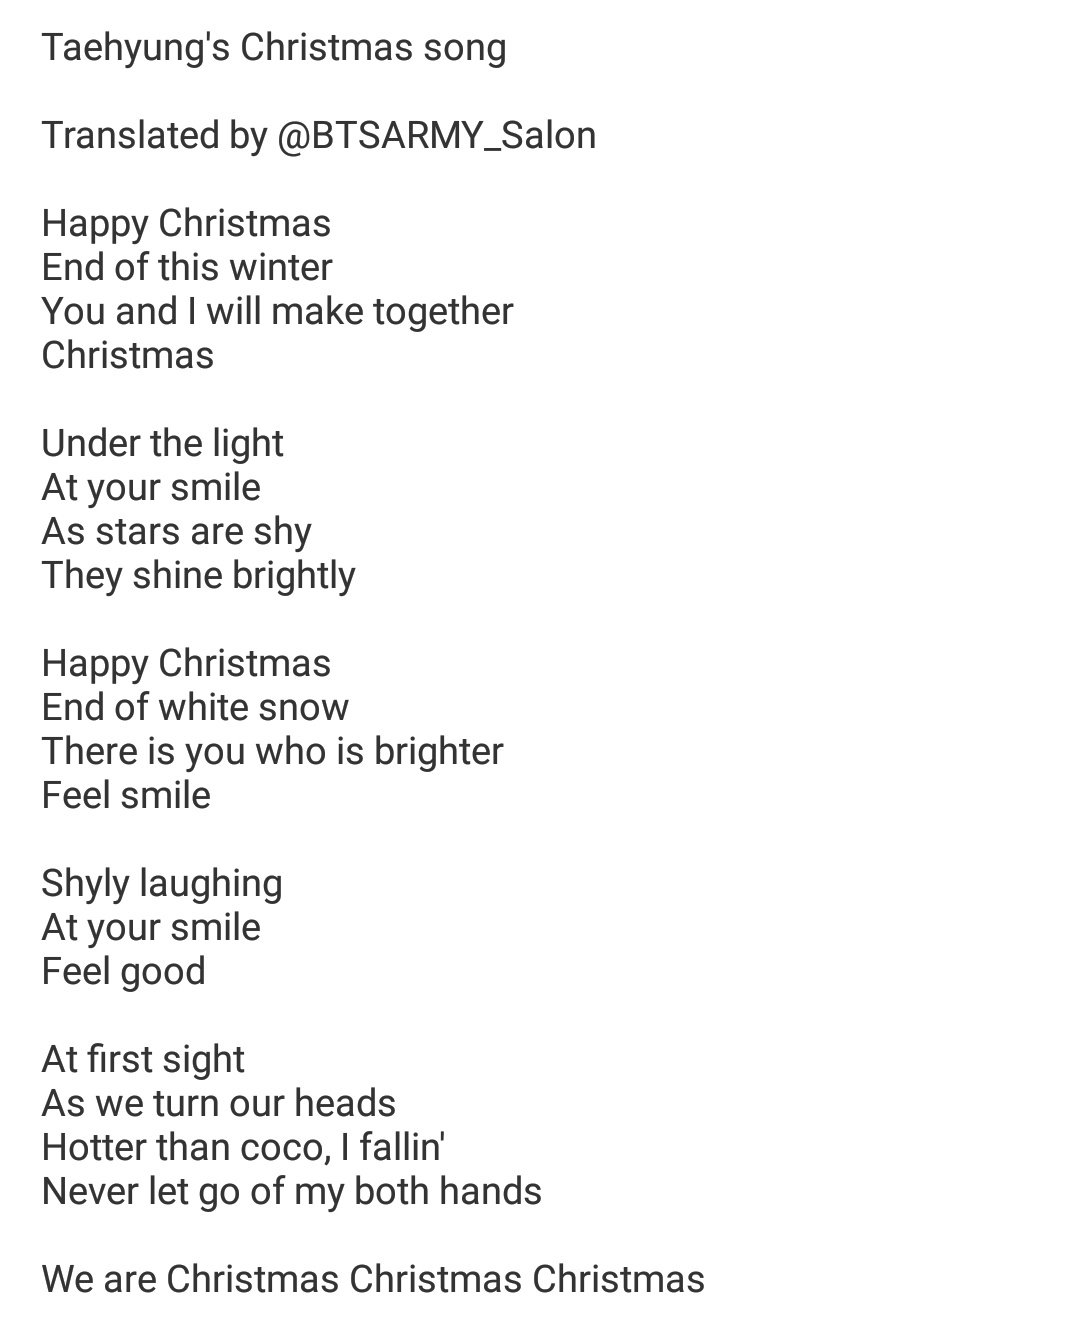 Текст песни можно я буду. Хэппи Кристмас песня текст. This Christmas песня текст.